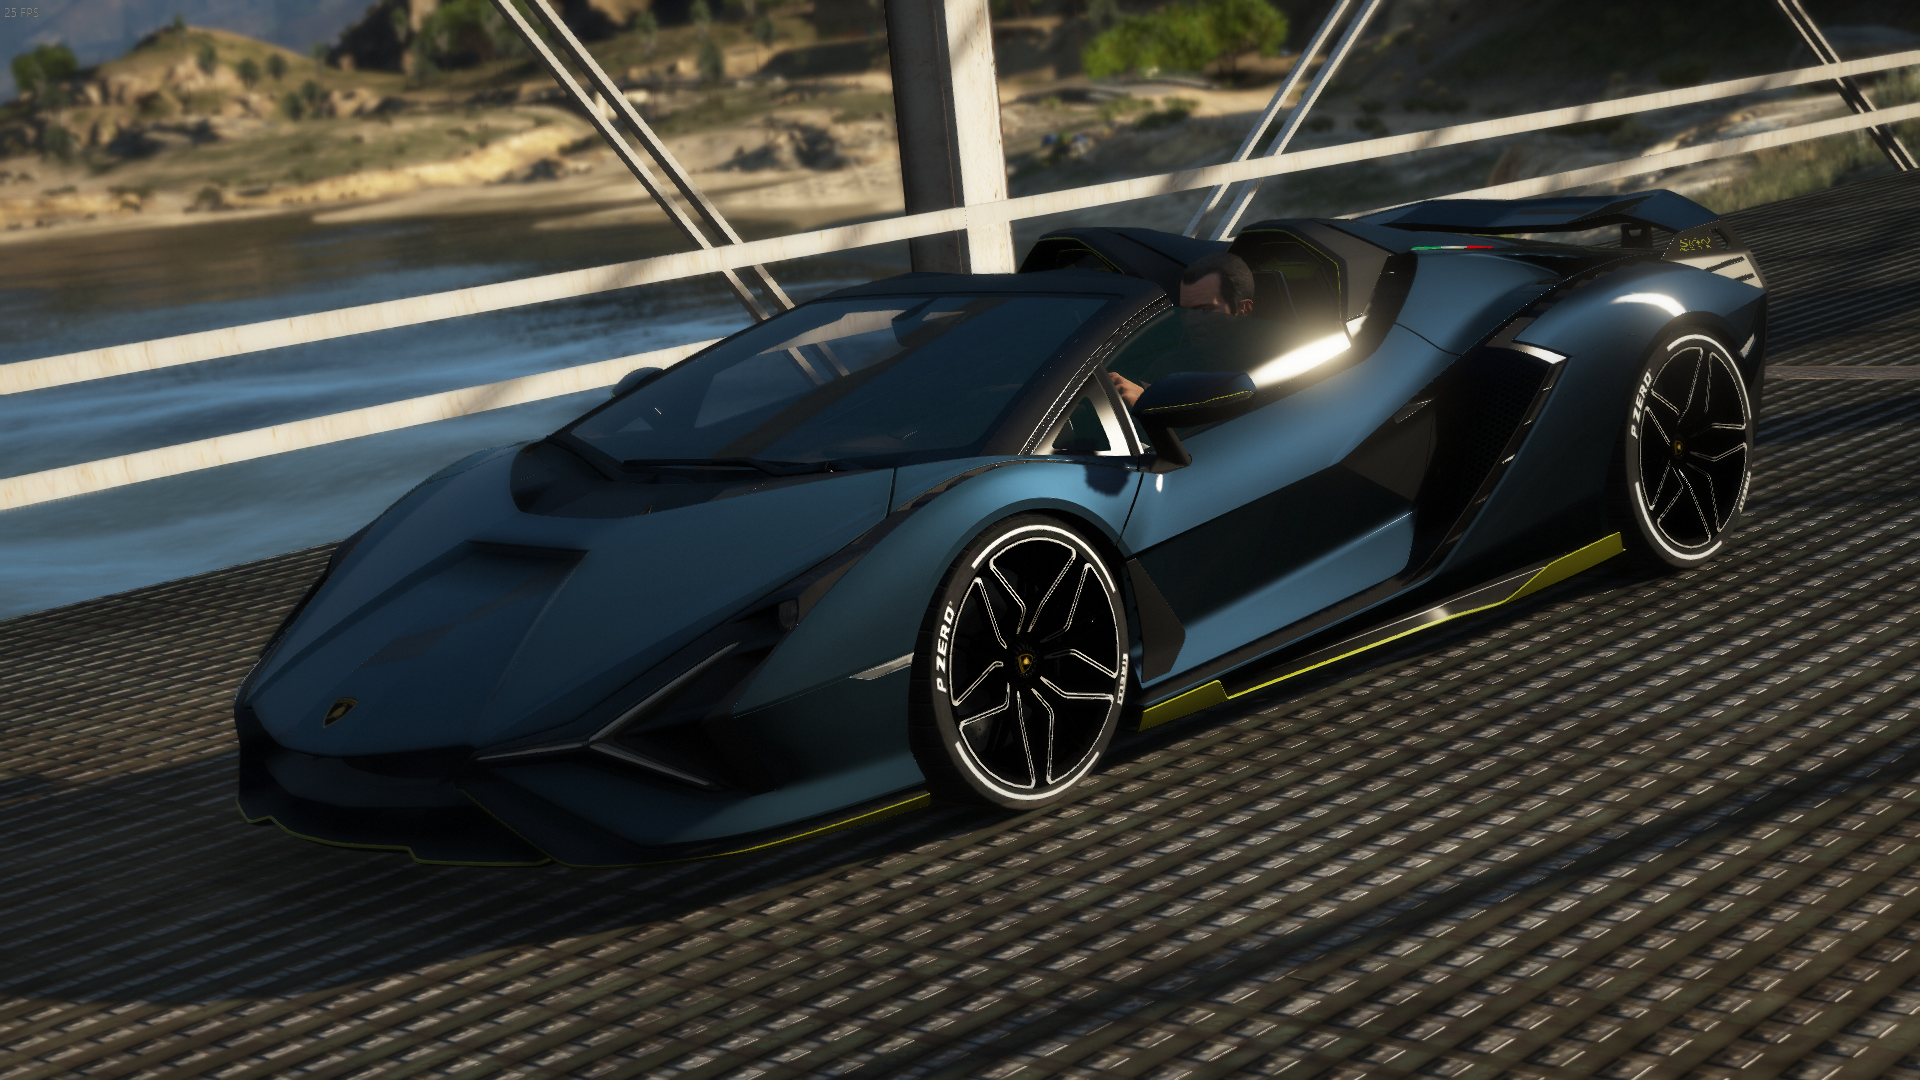 Image 6 - GTA 5 Lamborghini Sian Roadster  mod for Grand Theft Auto V -  Mod DB